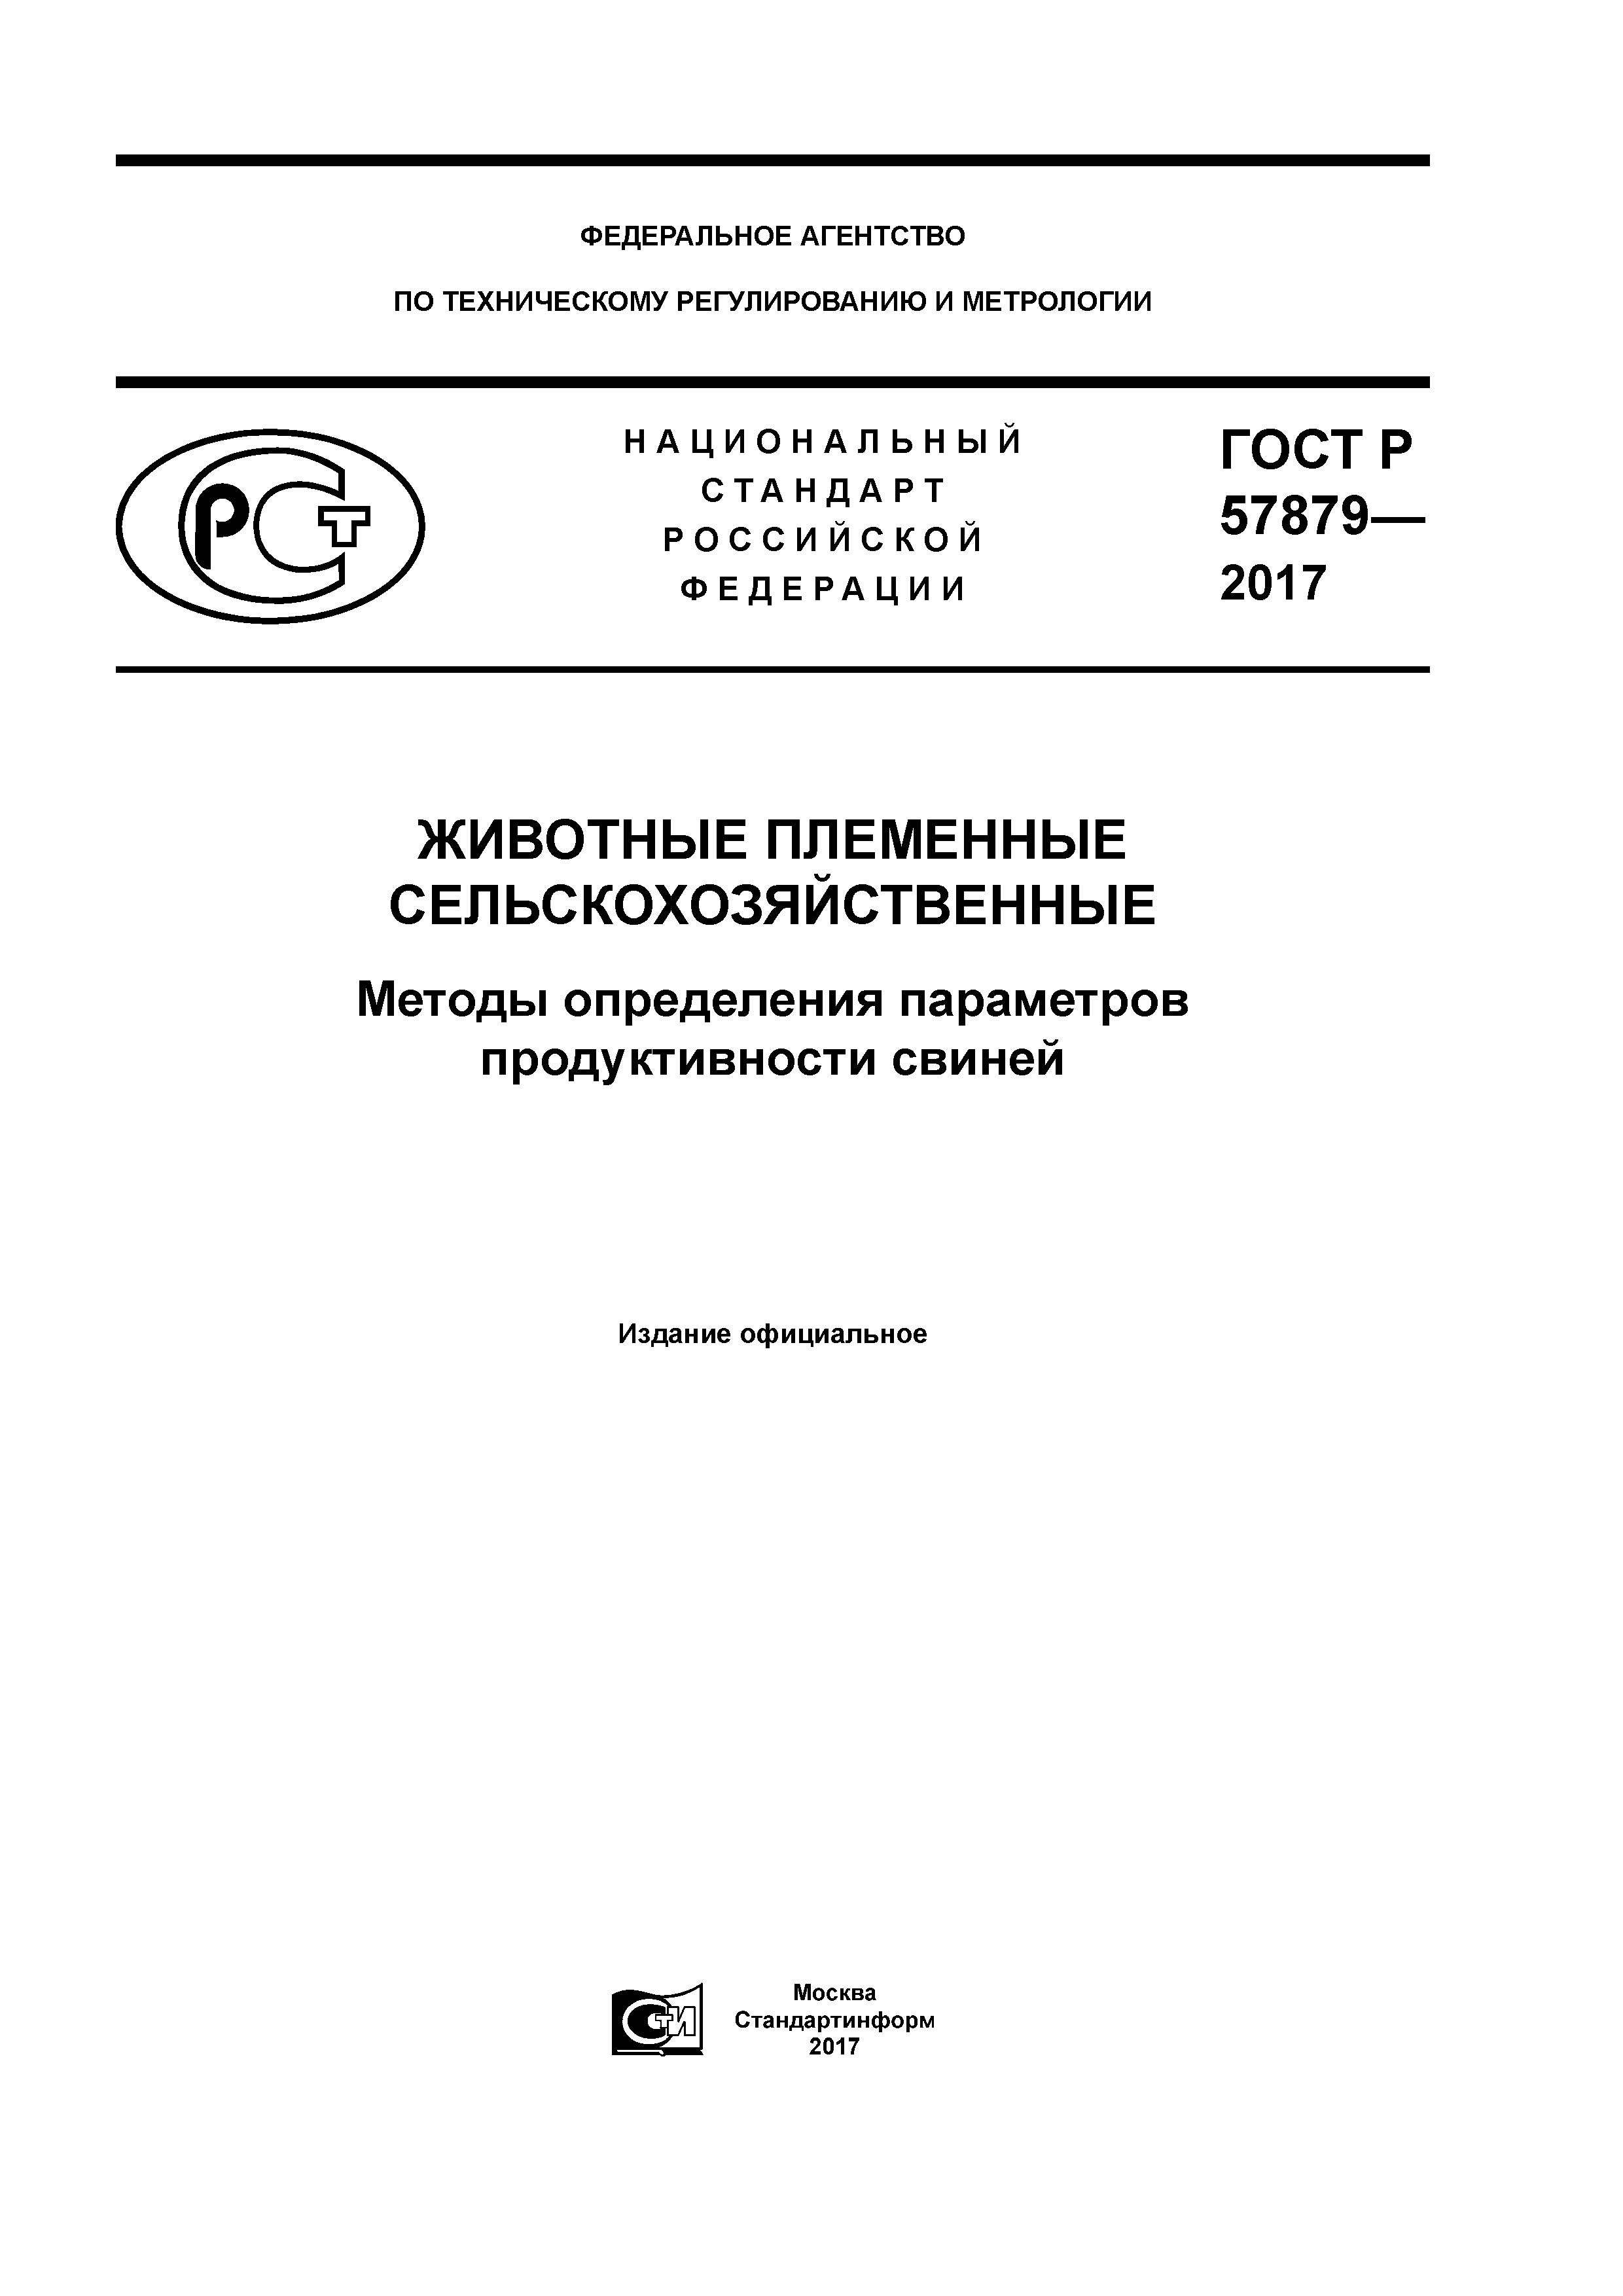 ГОСТ Р 57879-2017